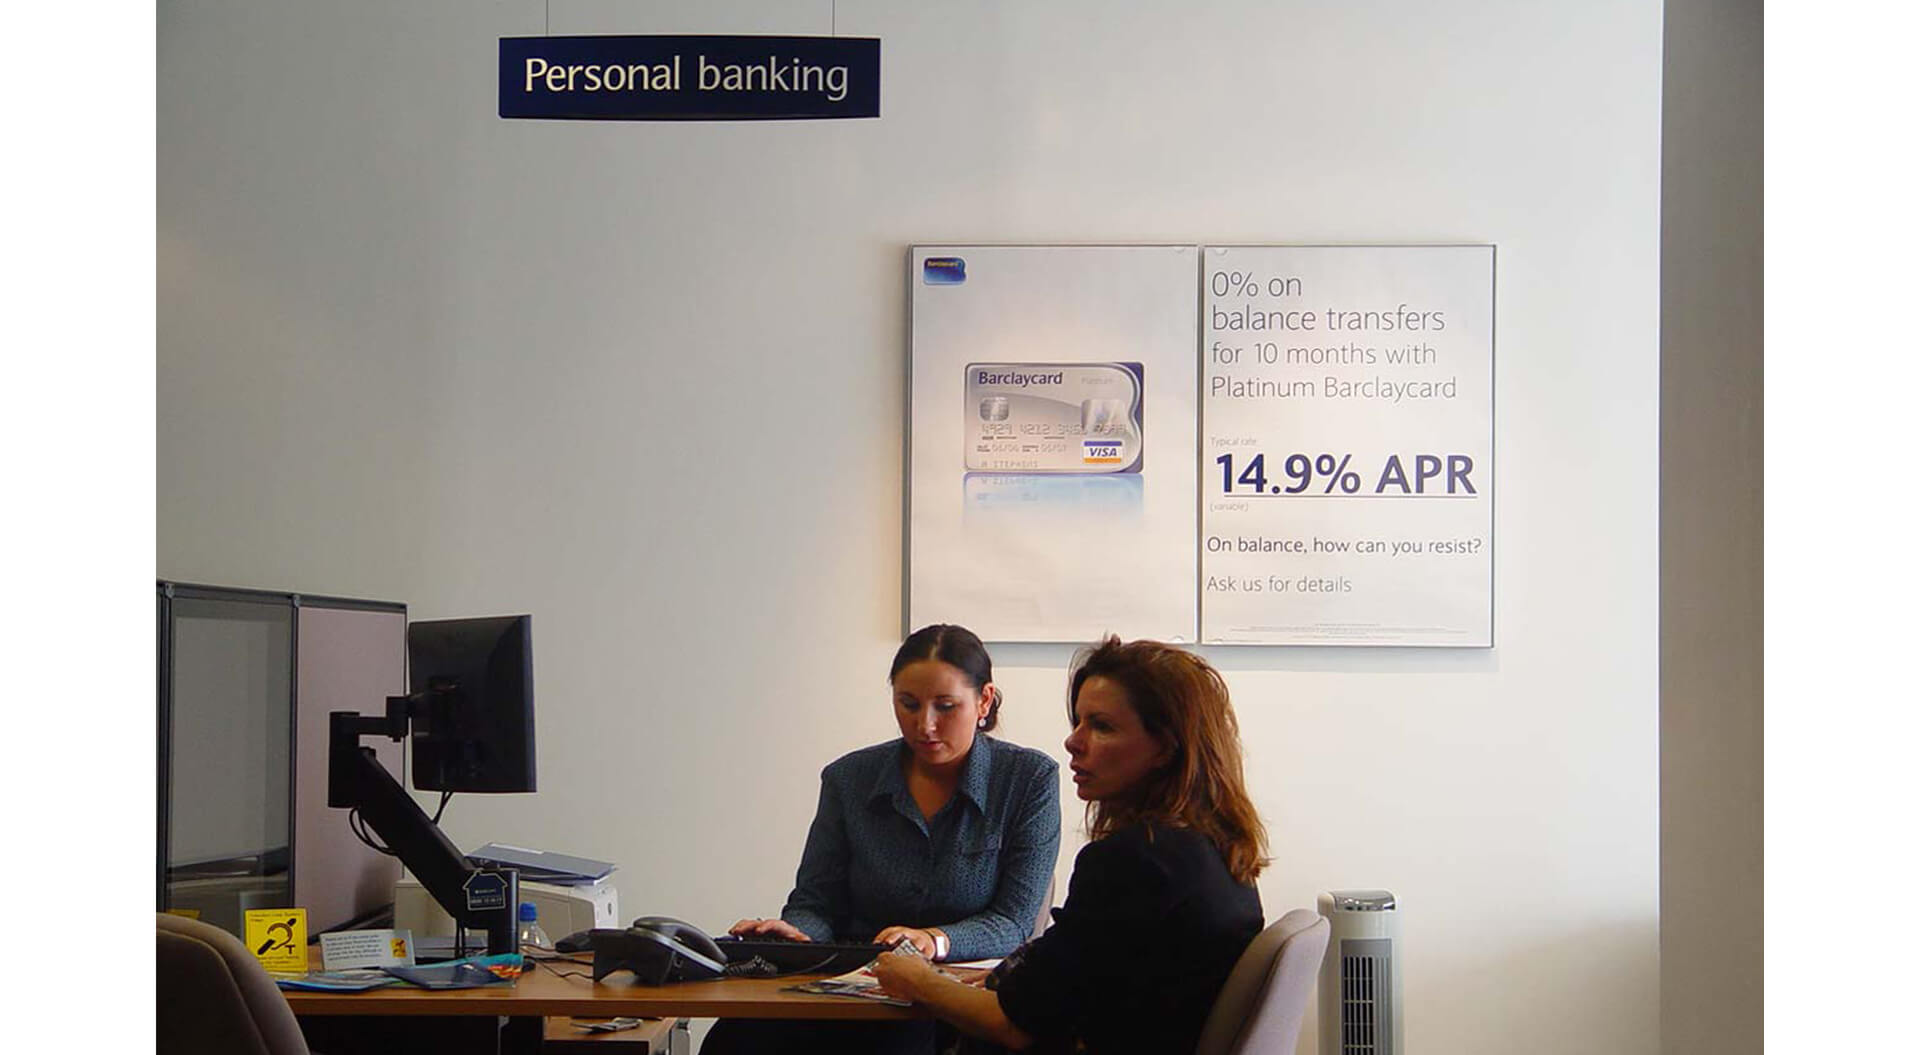 Personal banking desk at Barclays Bank branch interior design